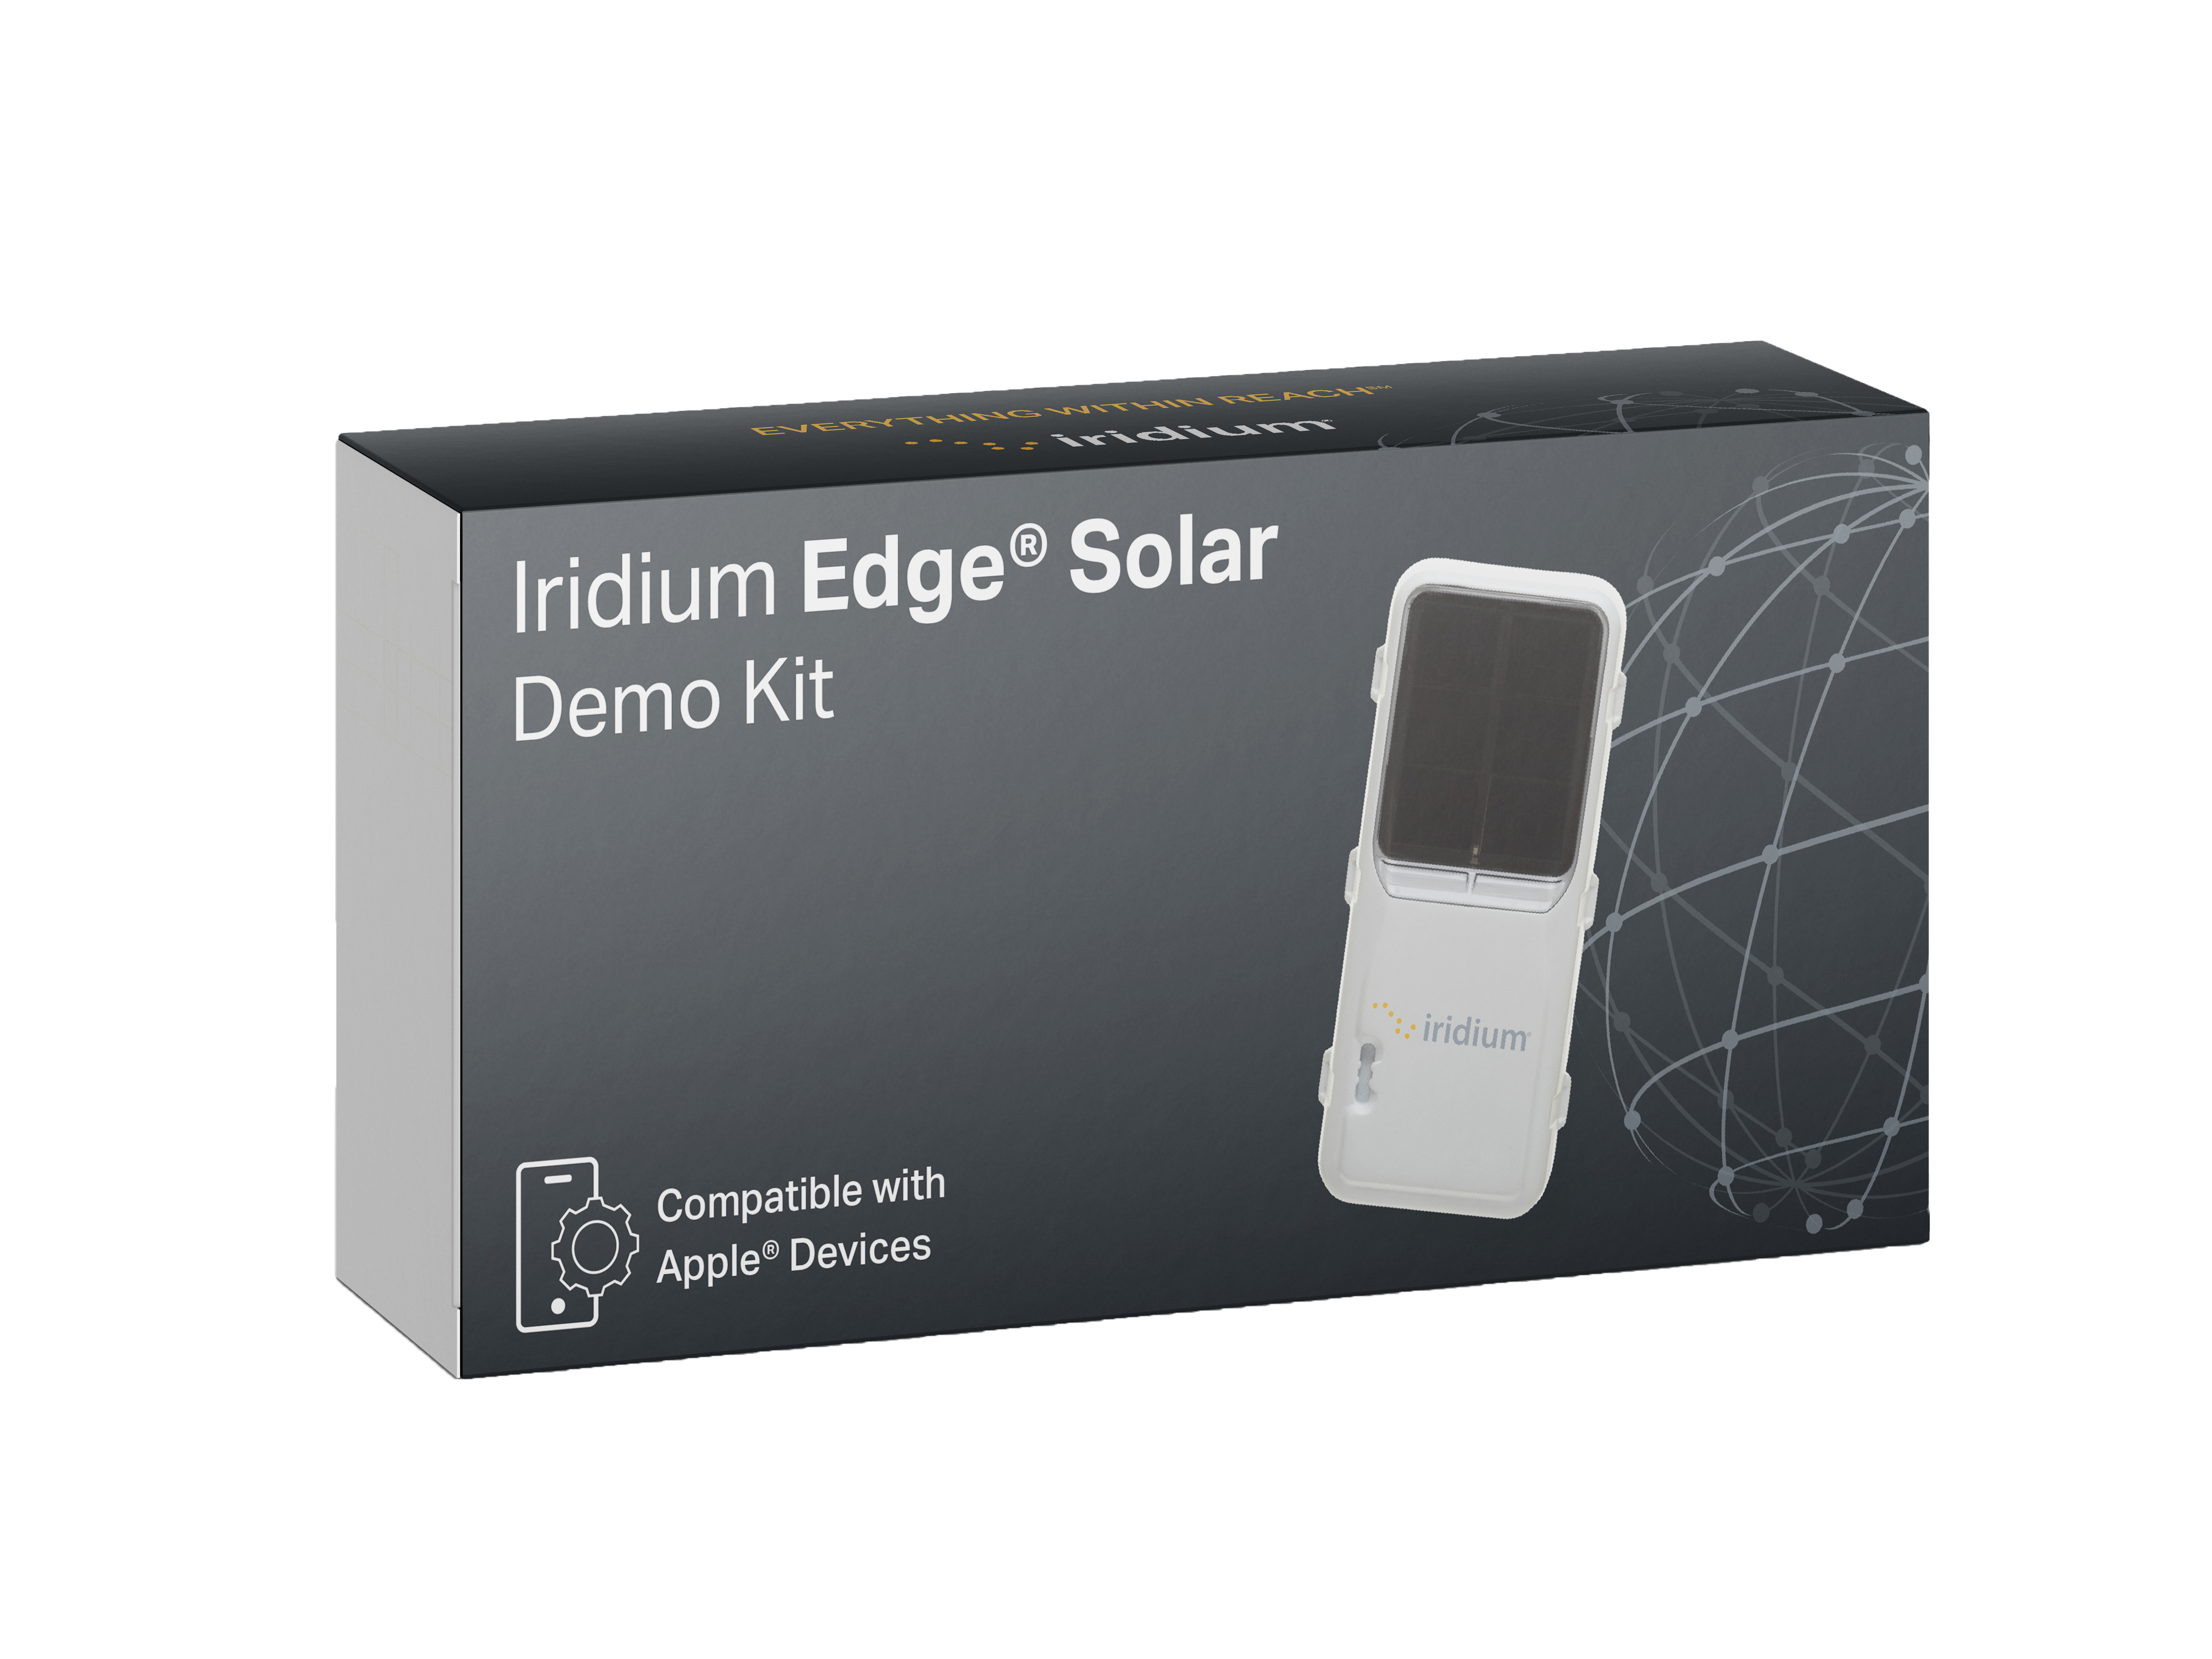 Iridium Edge Solar Box Image